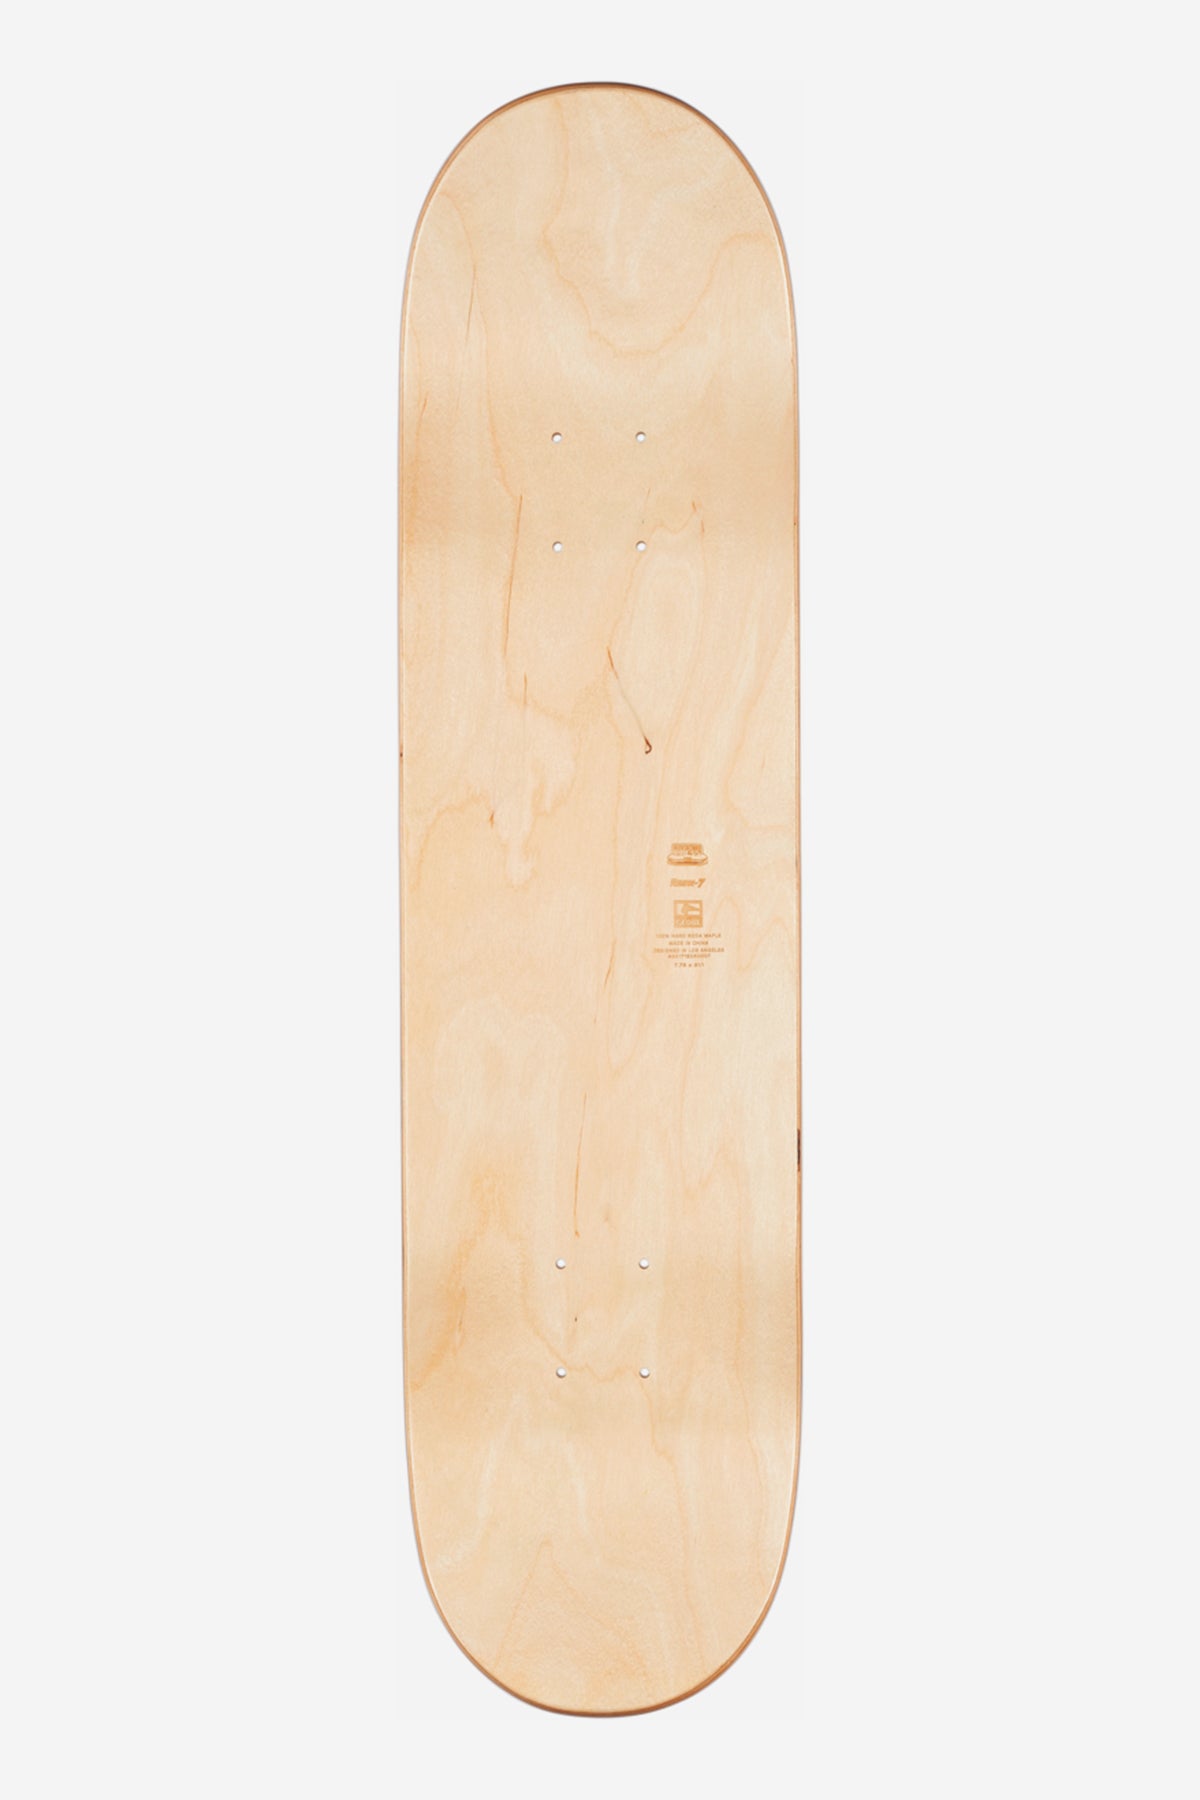 Goodstock - Clay - 8.5" Skateboard Deck